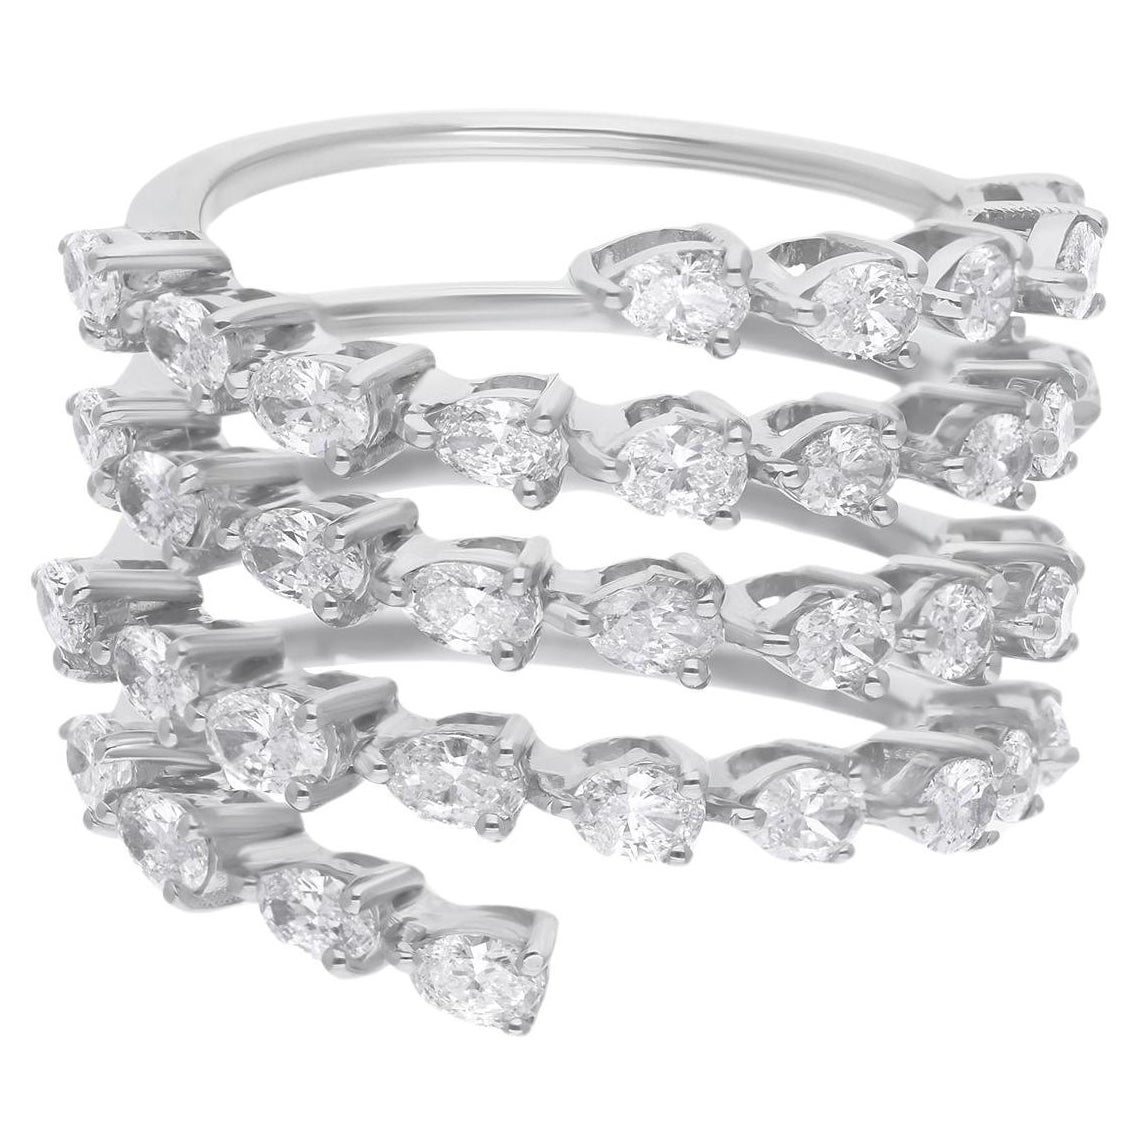 2.08 Carat Oval Shape Diamond Spiral Ring 14 Karat White Gold Handmade Jewelry